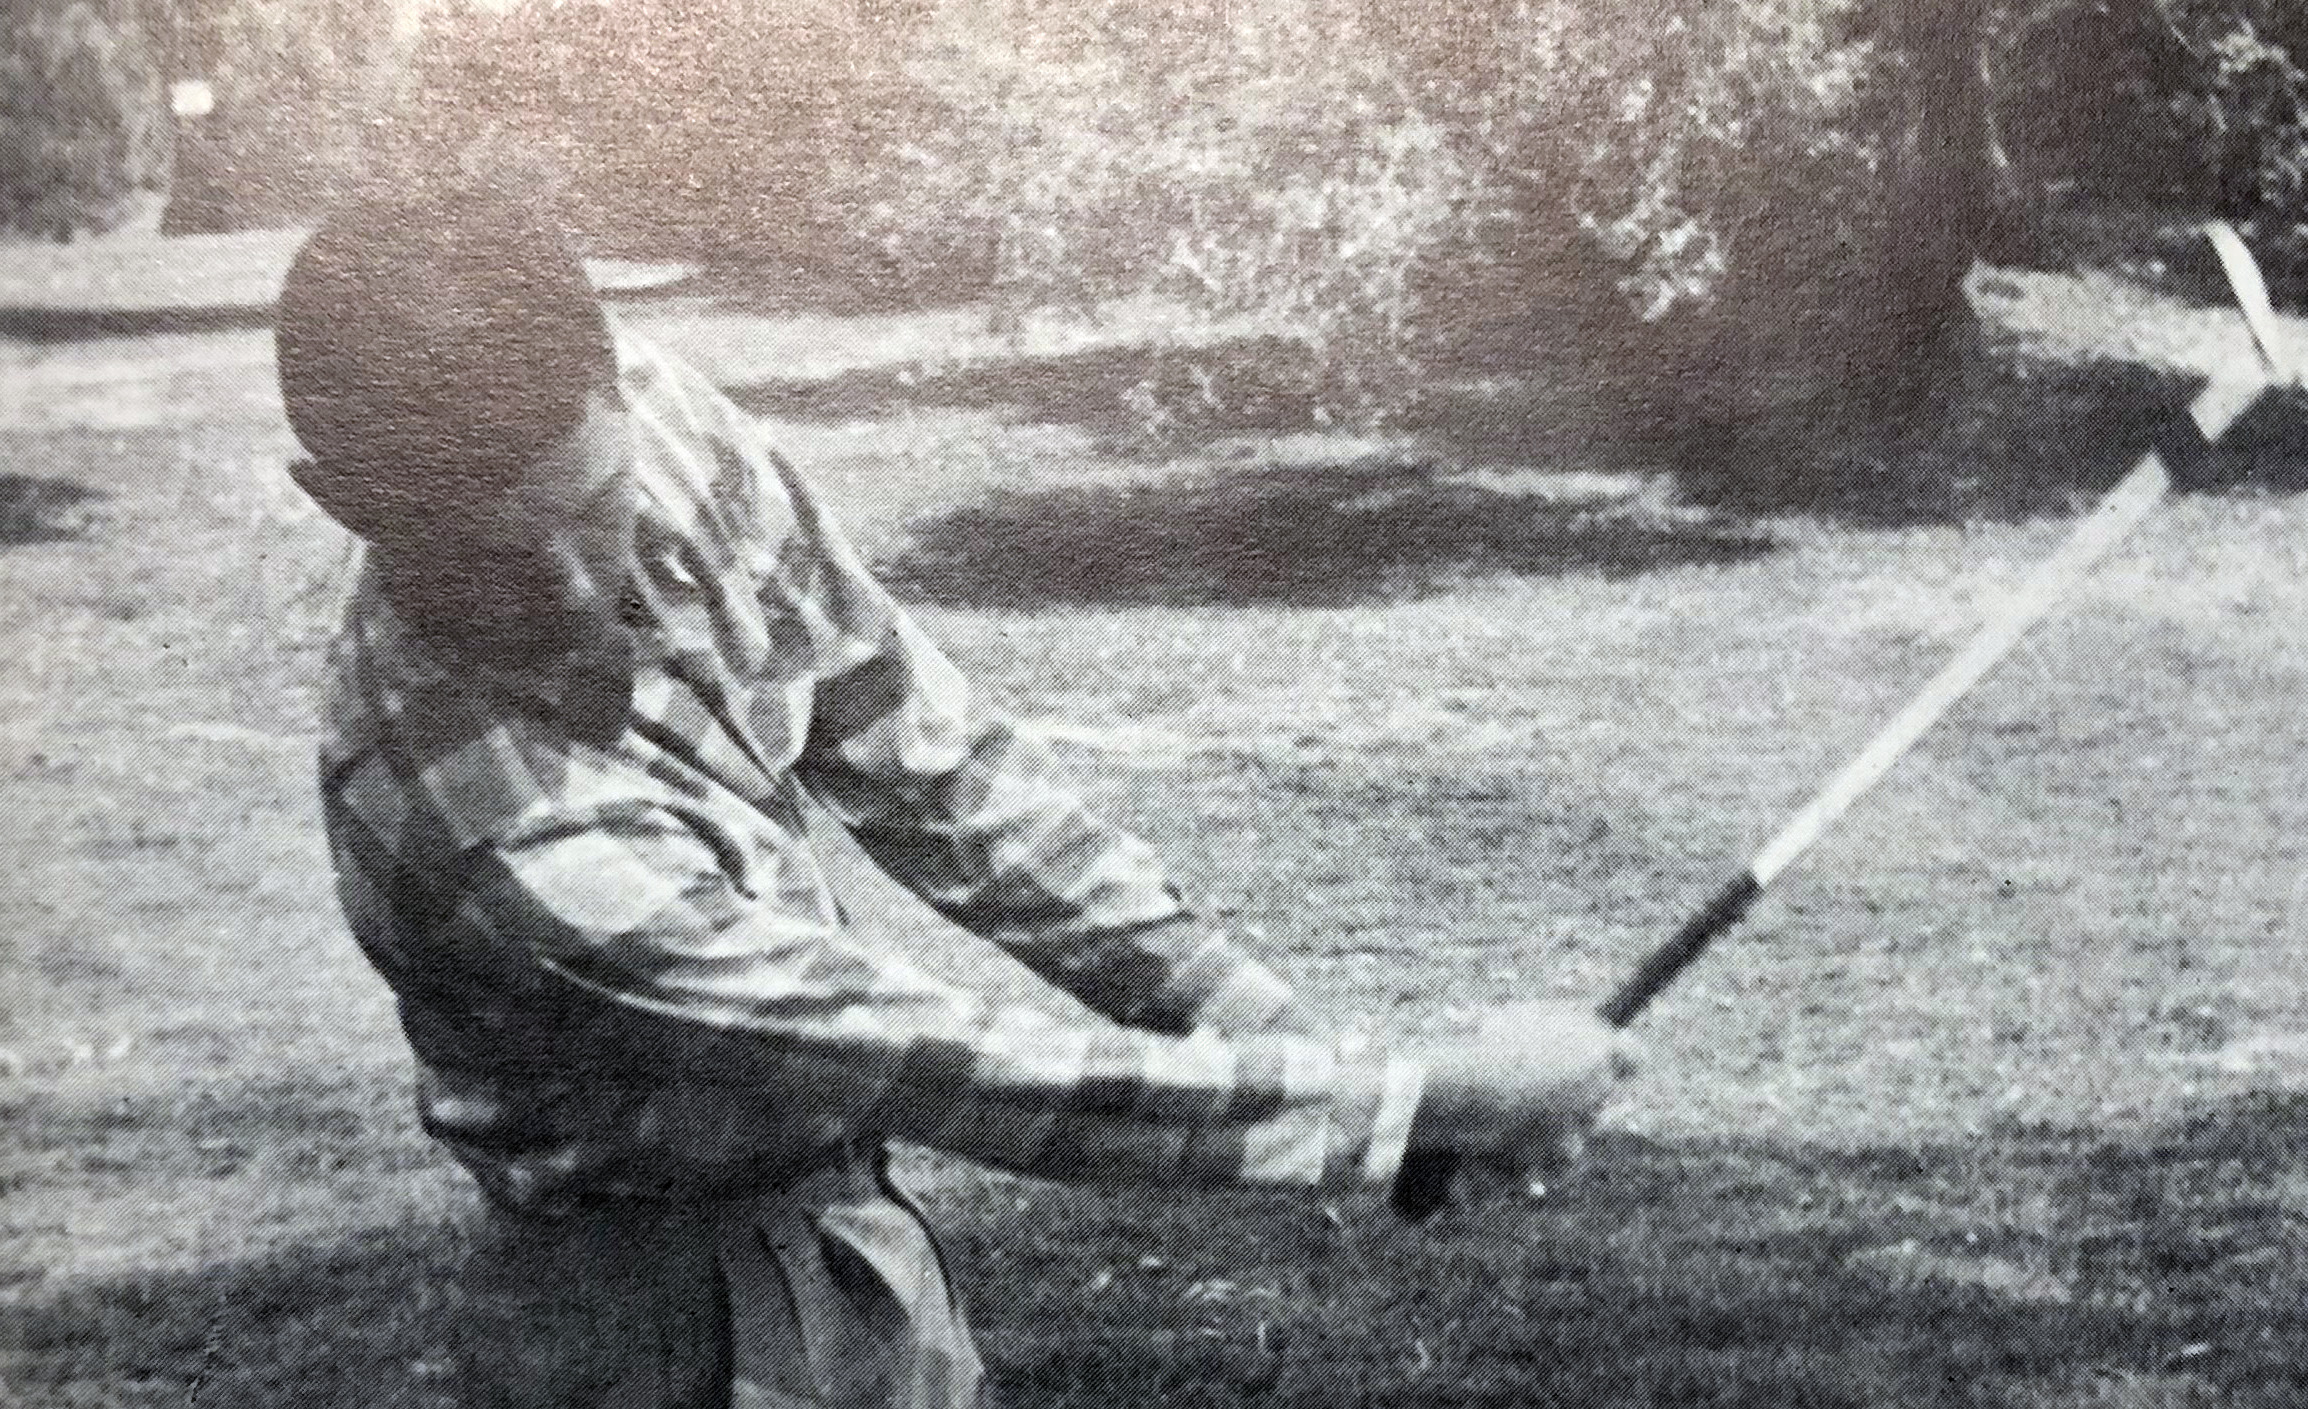 Gary Biszantz playing golf